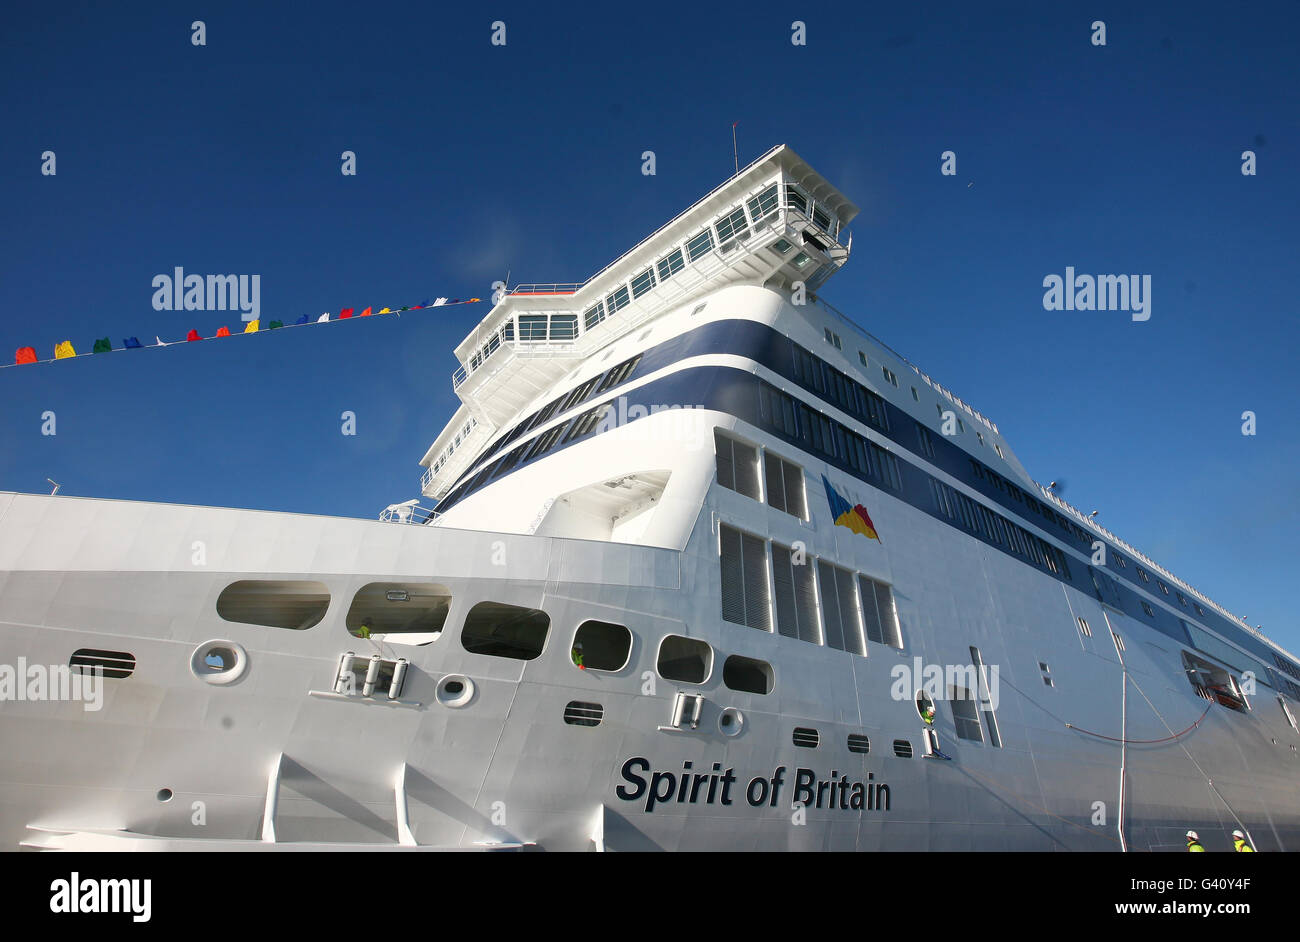 Spirit of Britain ferry Stock Photo - Alamy